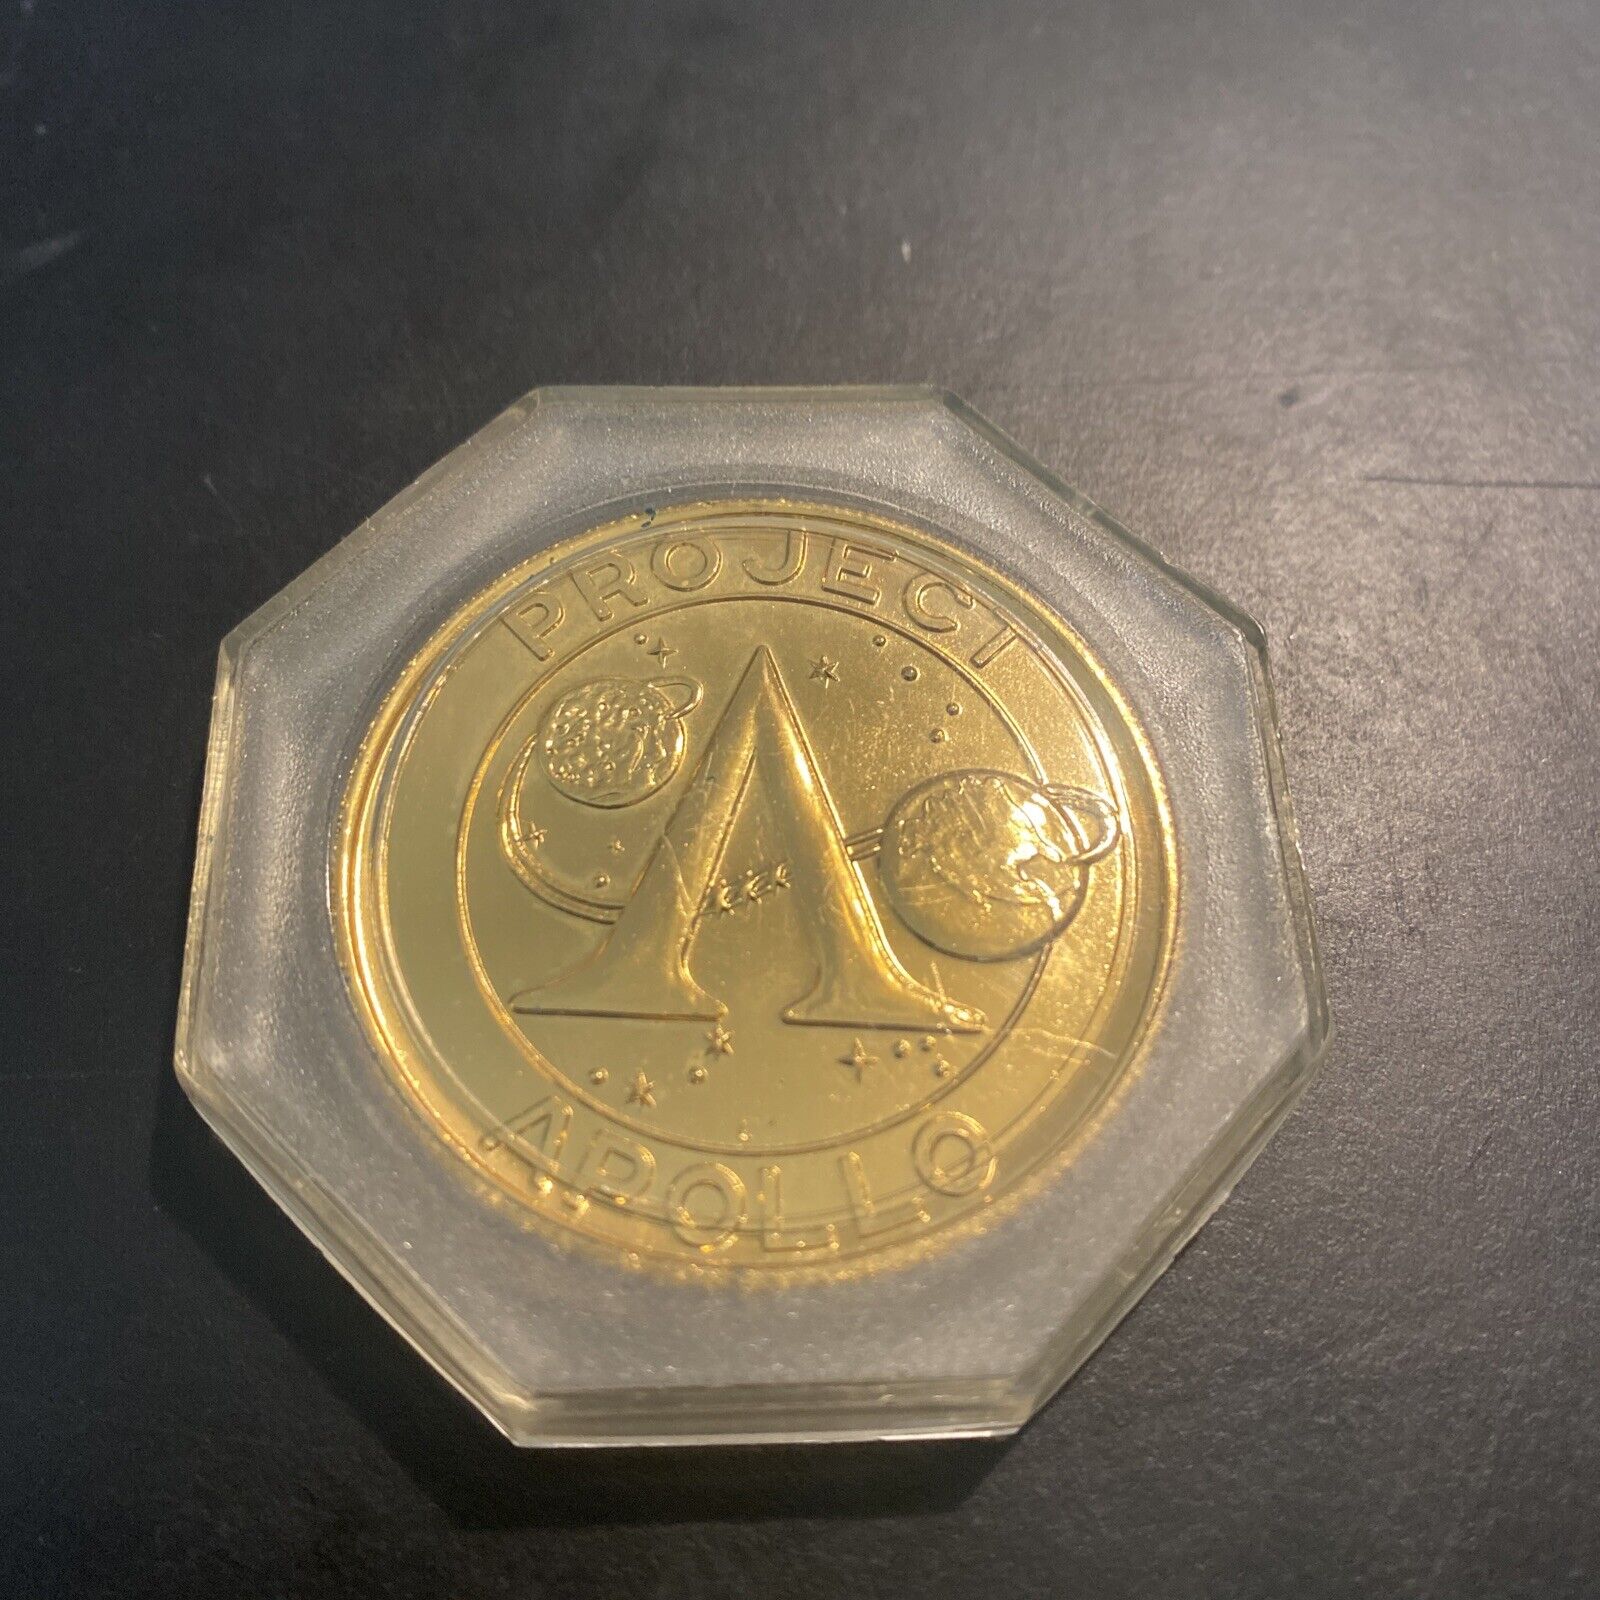 VINTAGE BOEING 1969 PROJECT APOLLO 11 COMMEMORATIVE COIN ASTRONAUTS MOON LANDING